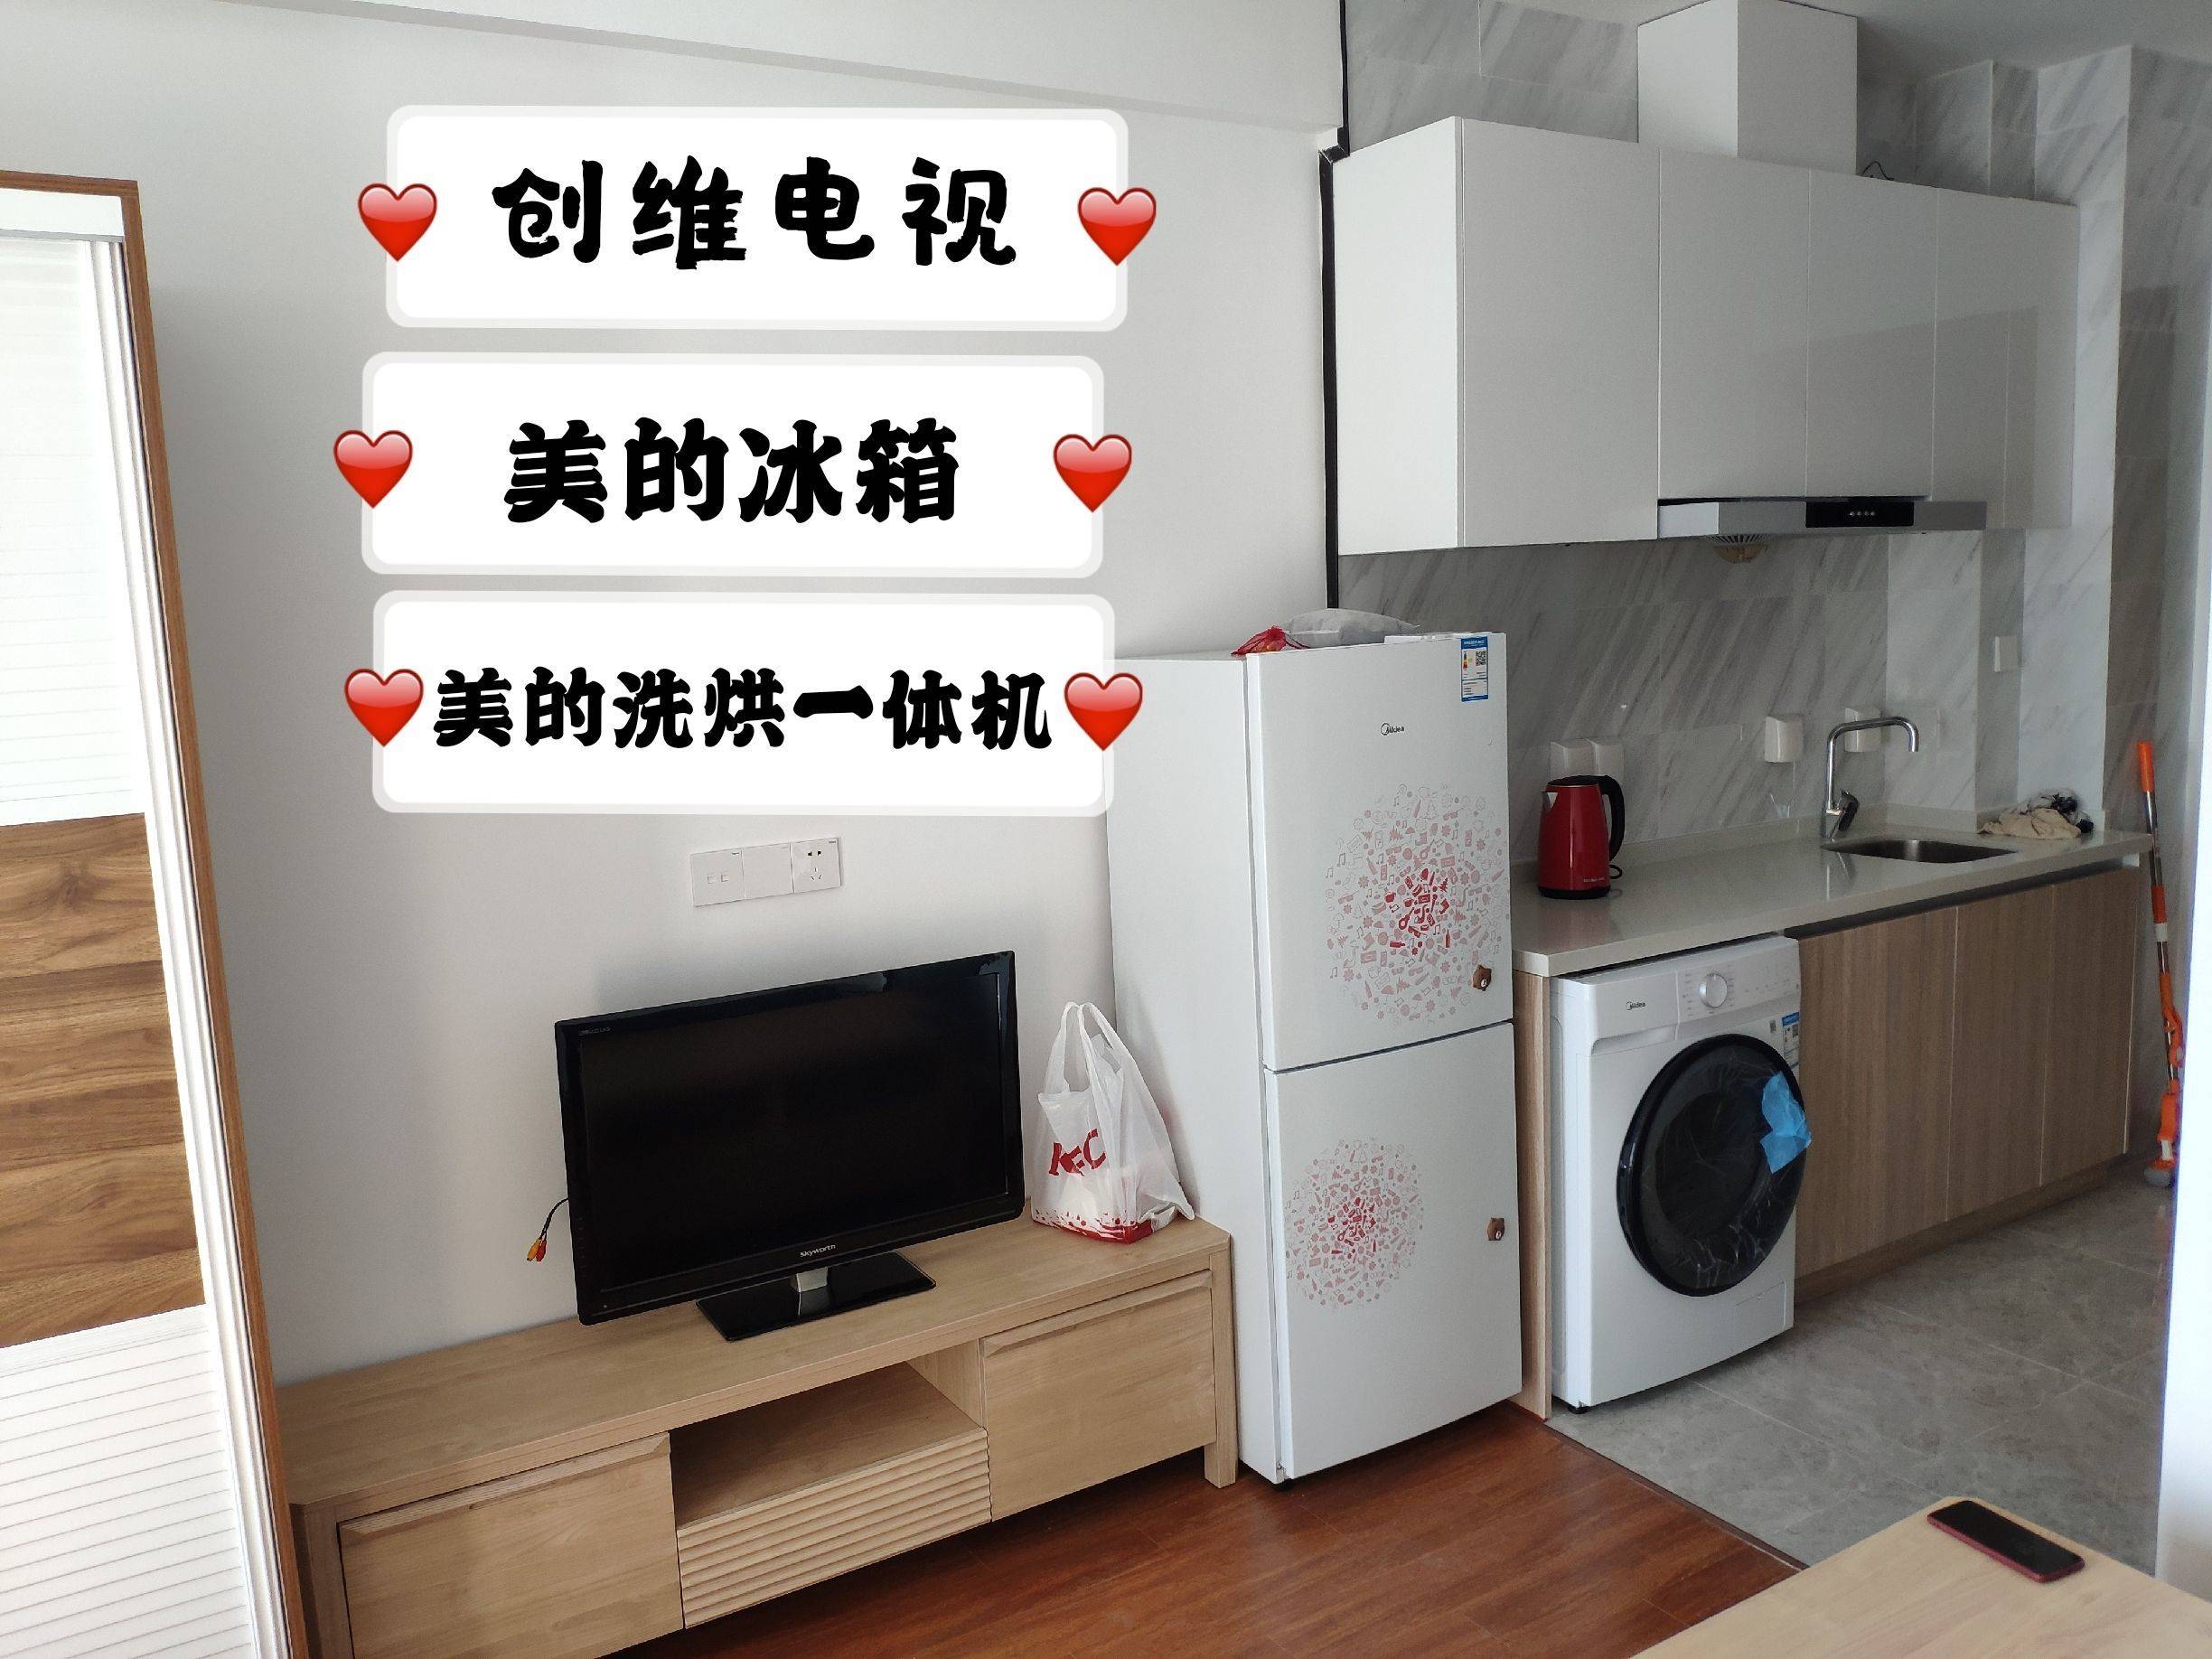 Suzhou-Xiangcheng-Cozy Home,Clean&Comfy,No Gender Limit